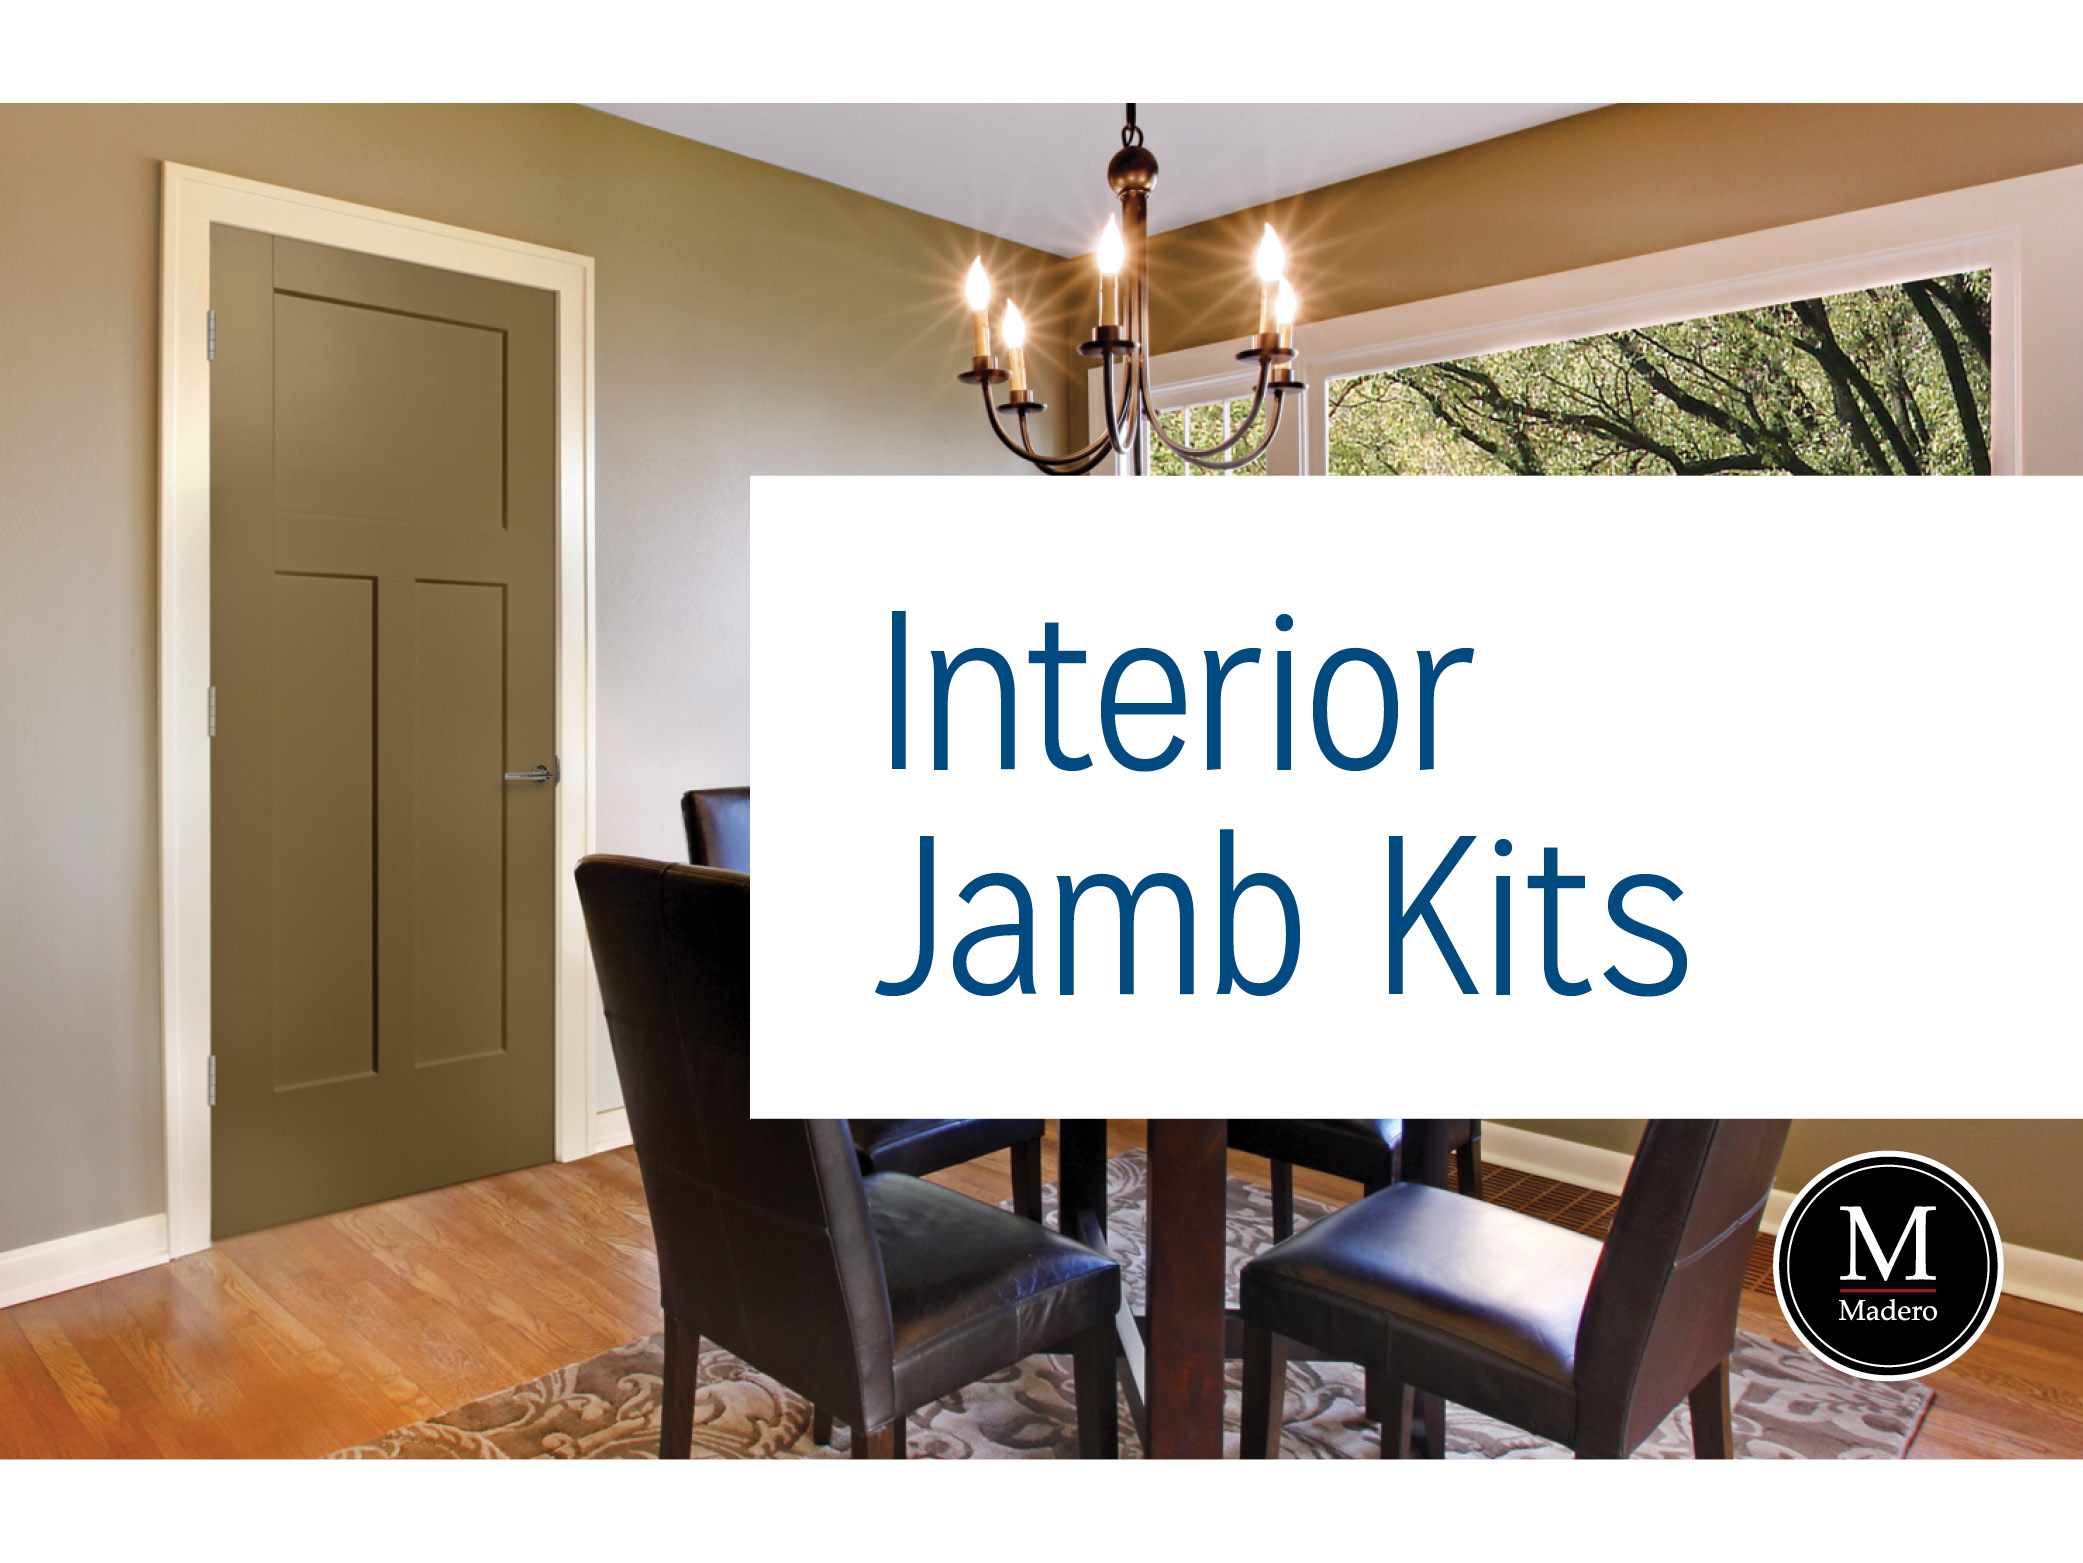 Interior Jamb Kits